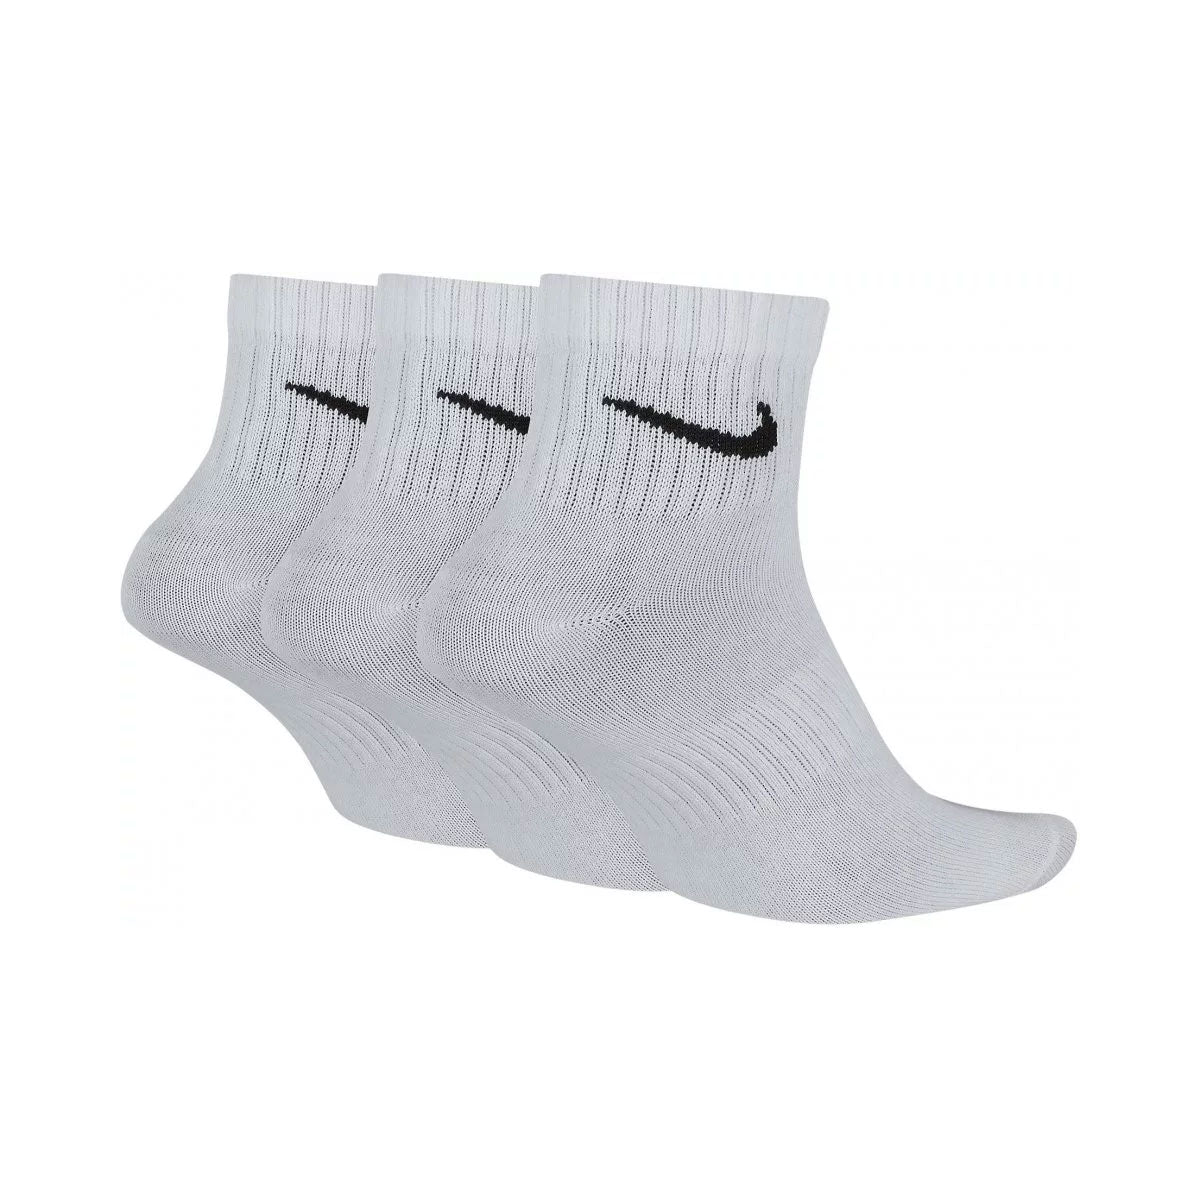 Nike Unisex Training Ankle Socks (3pairs)